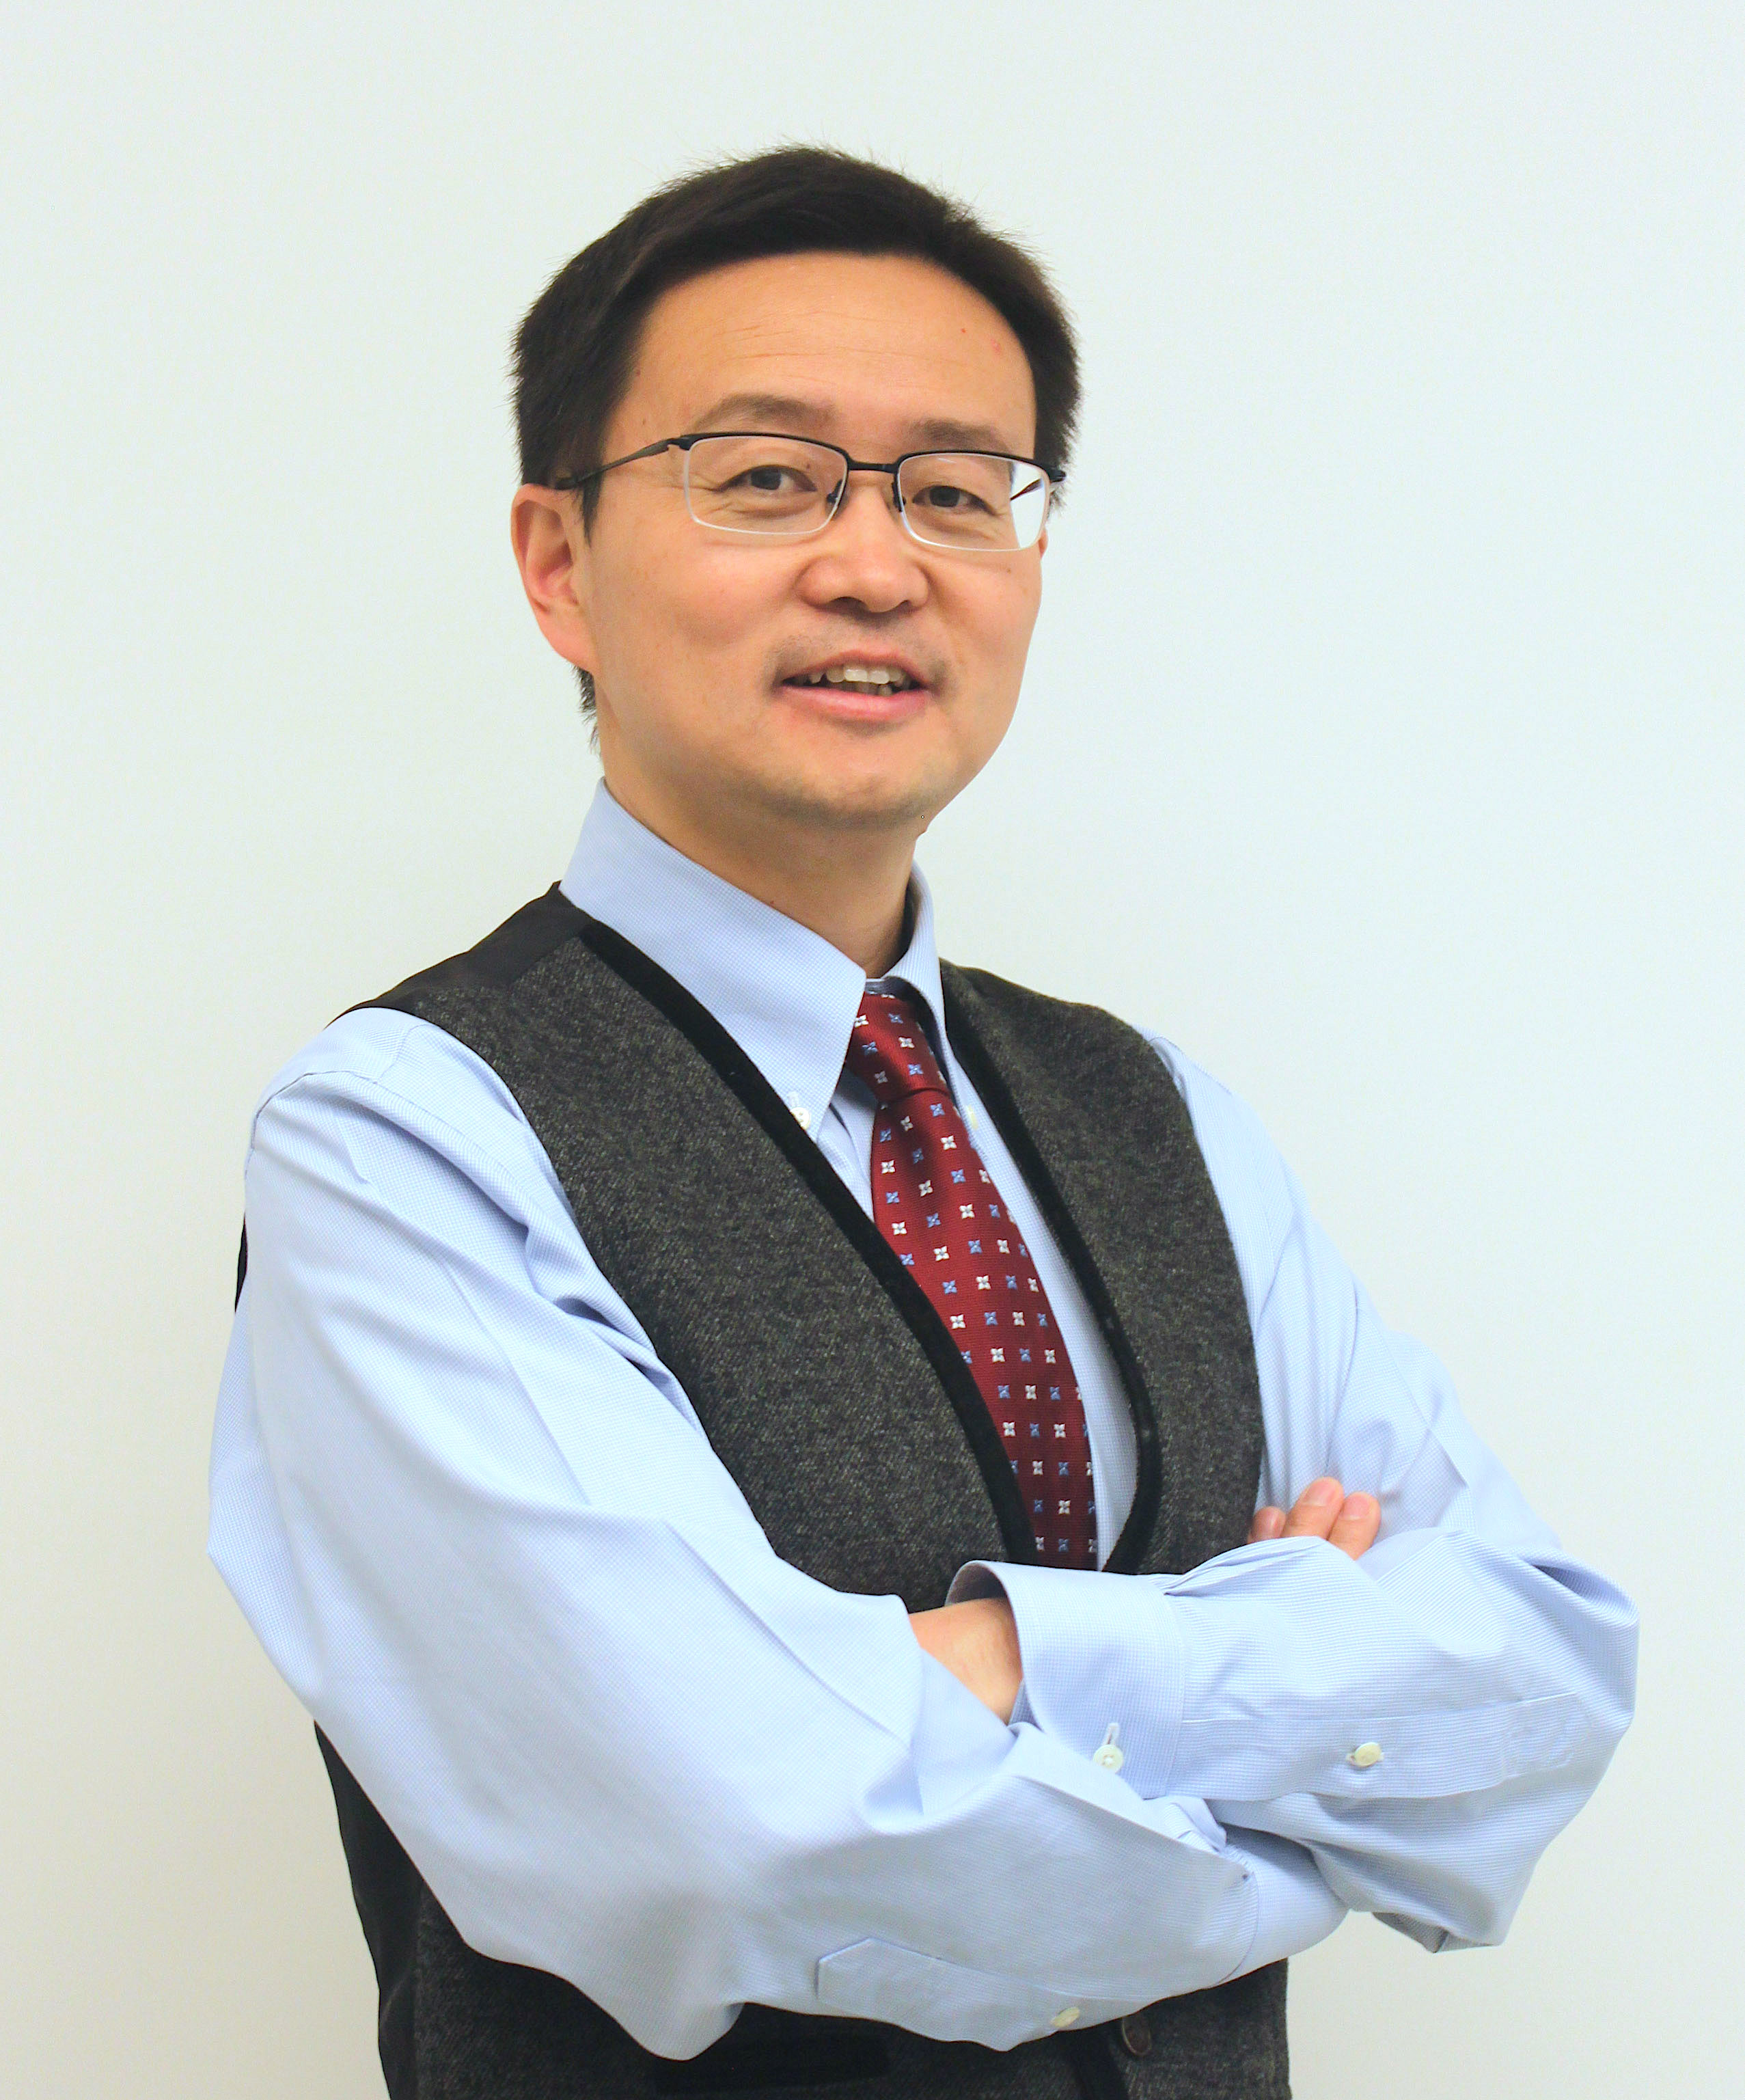 Dr. Mingnan Chen